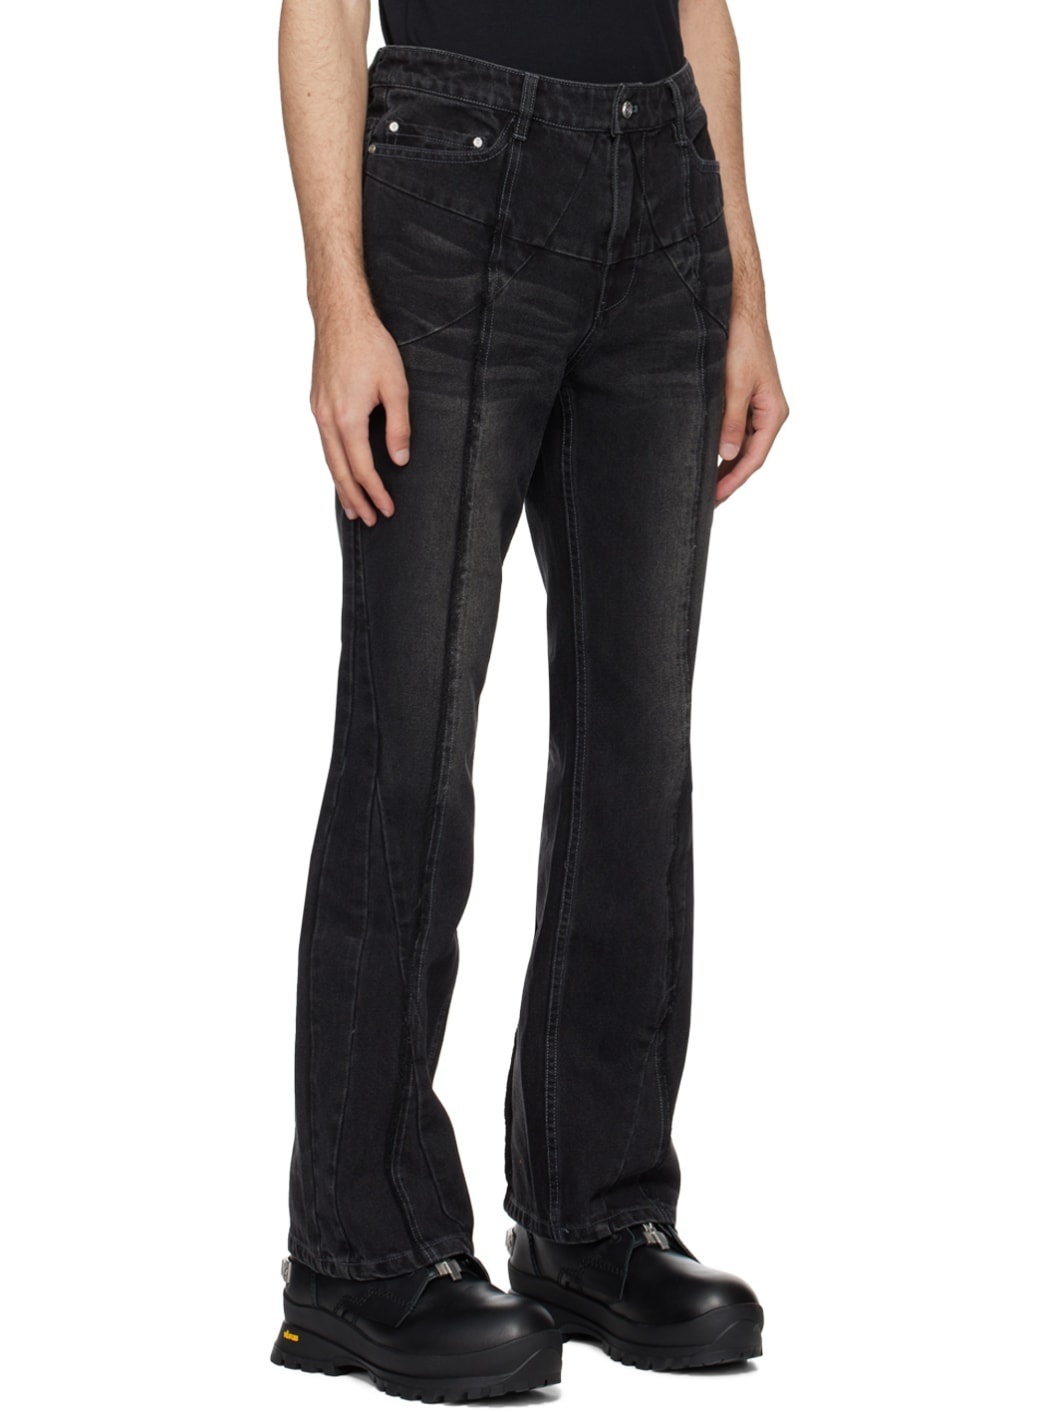 Black Stagger Streamline Arch Jeans - 2